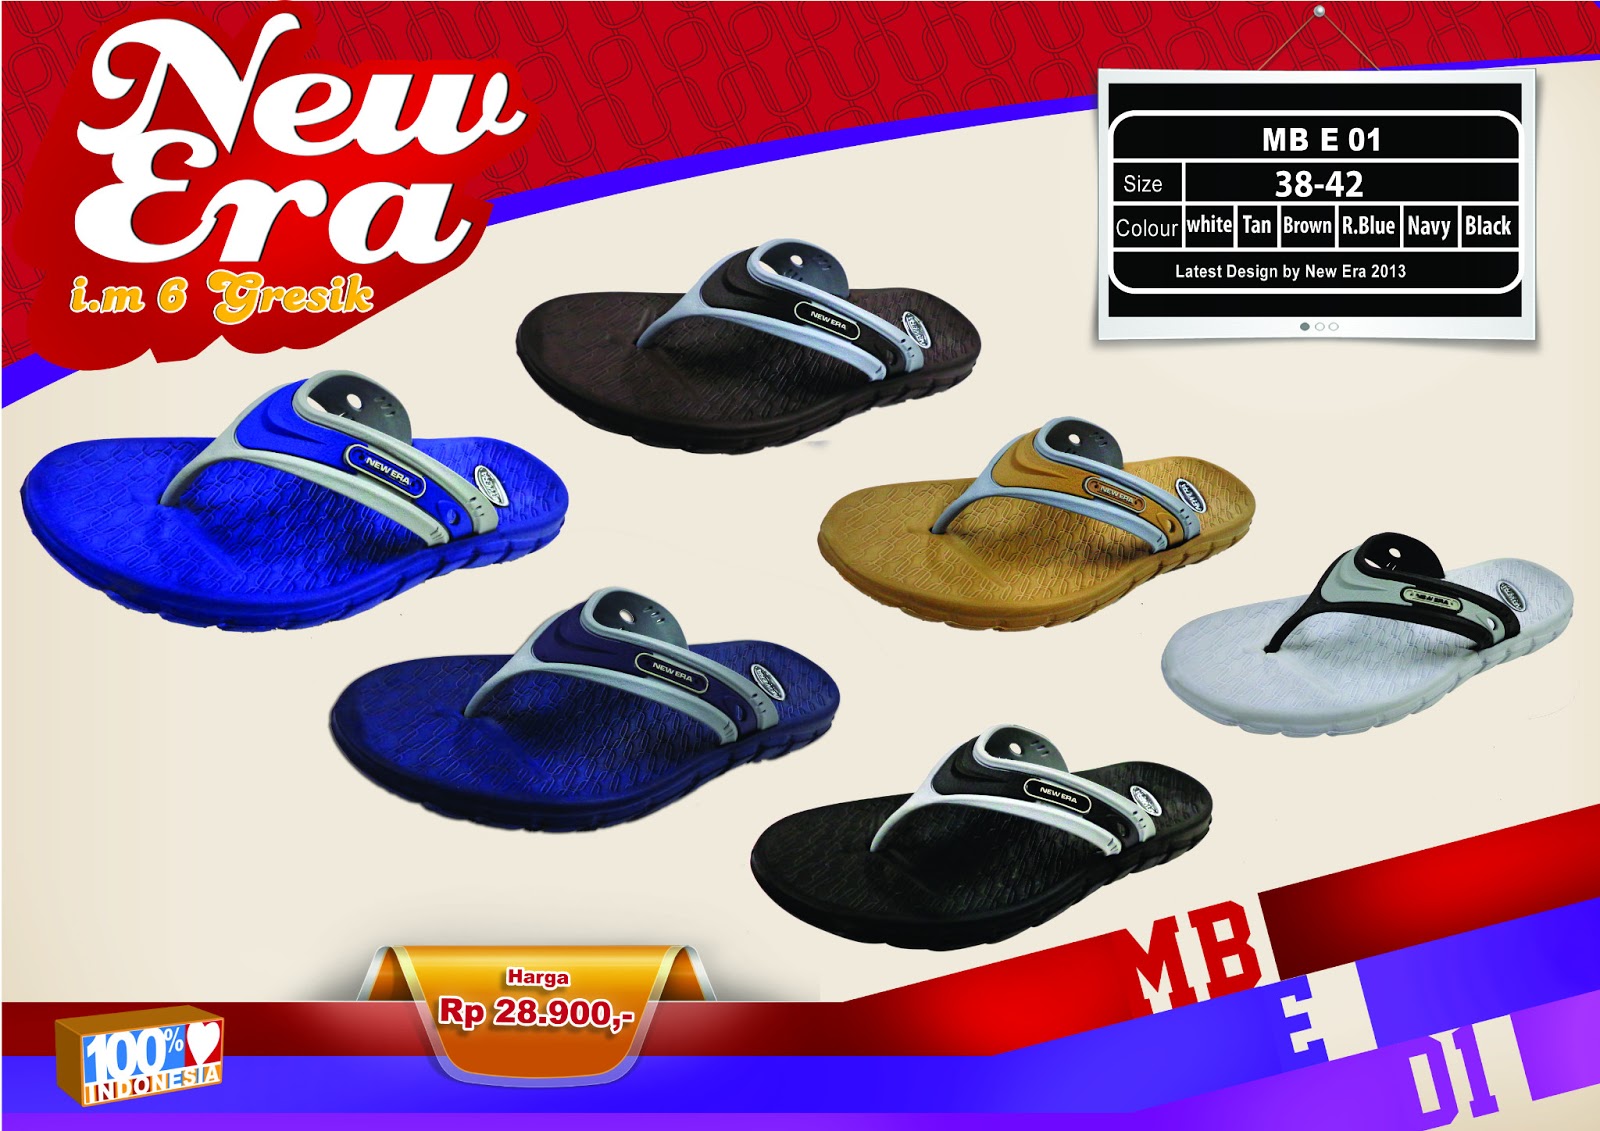  New  Era  im6 Gresik Produk Terbaru 2013 Sandal  New  Era  Gresik